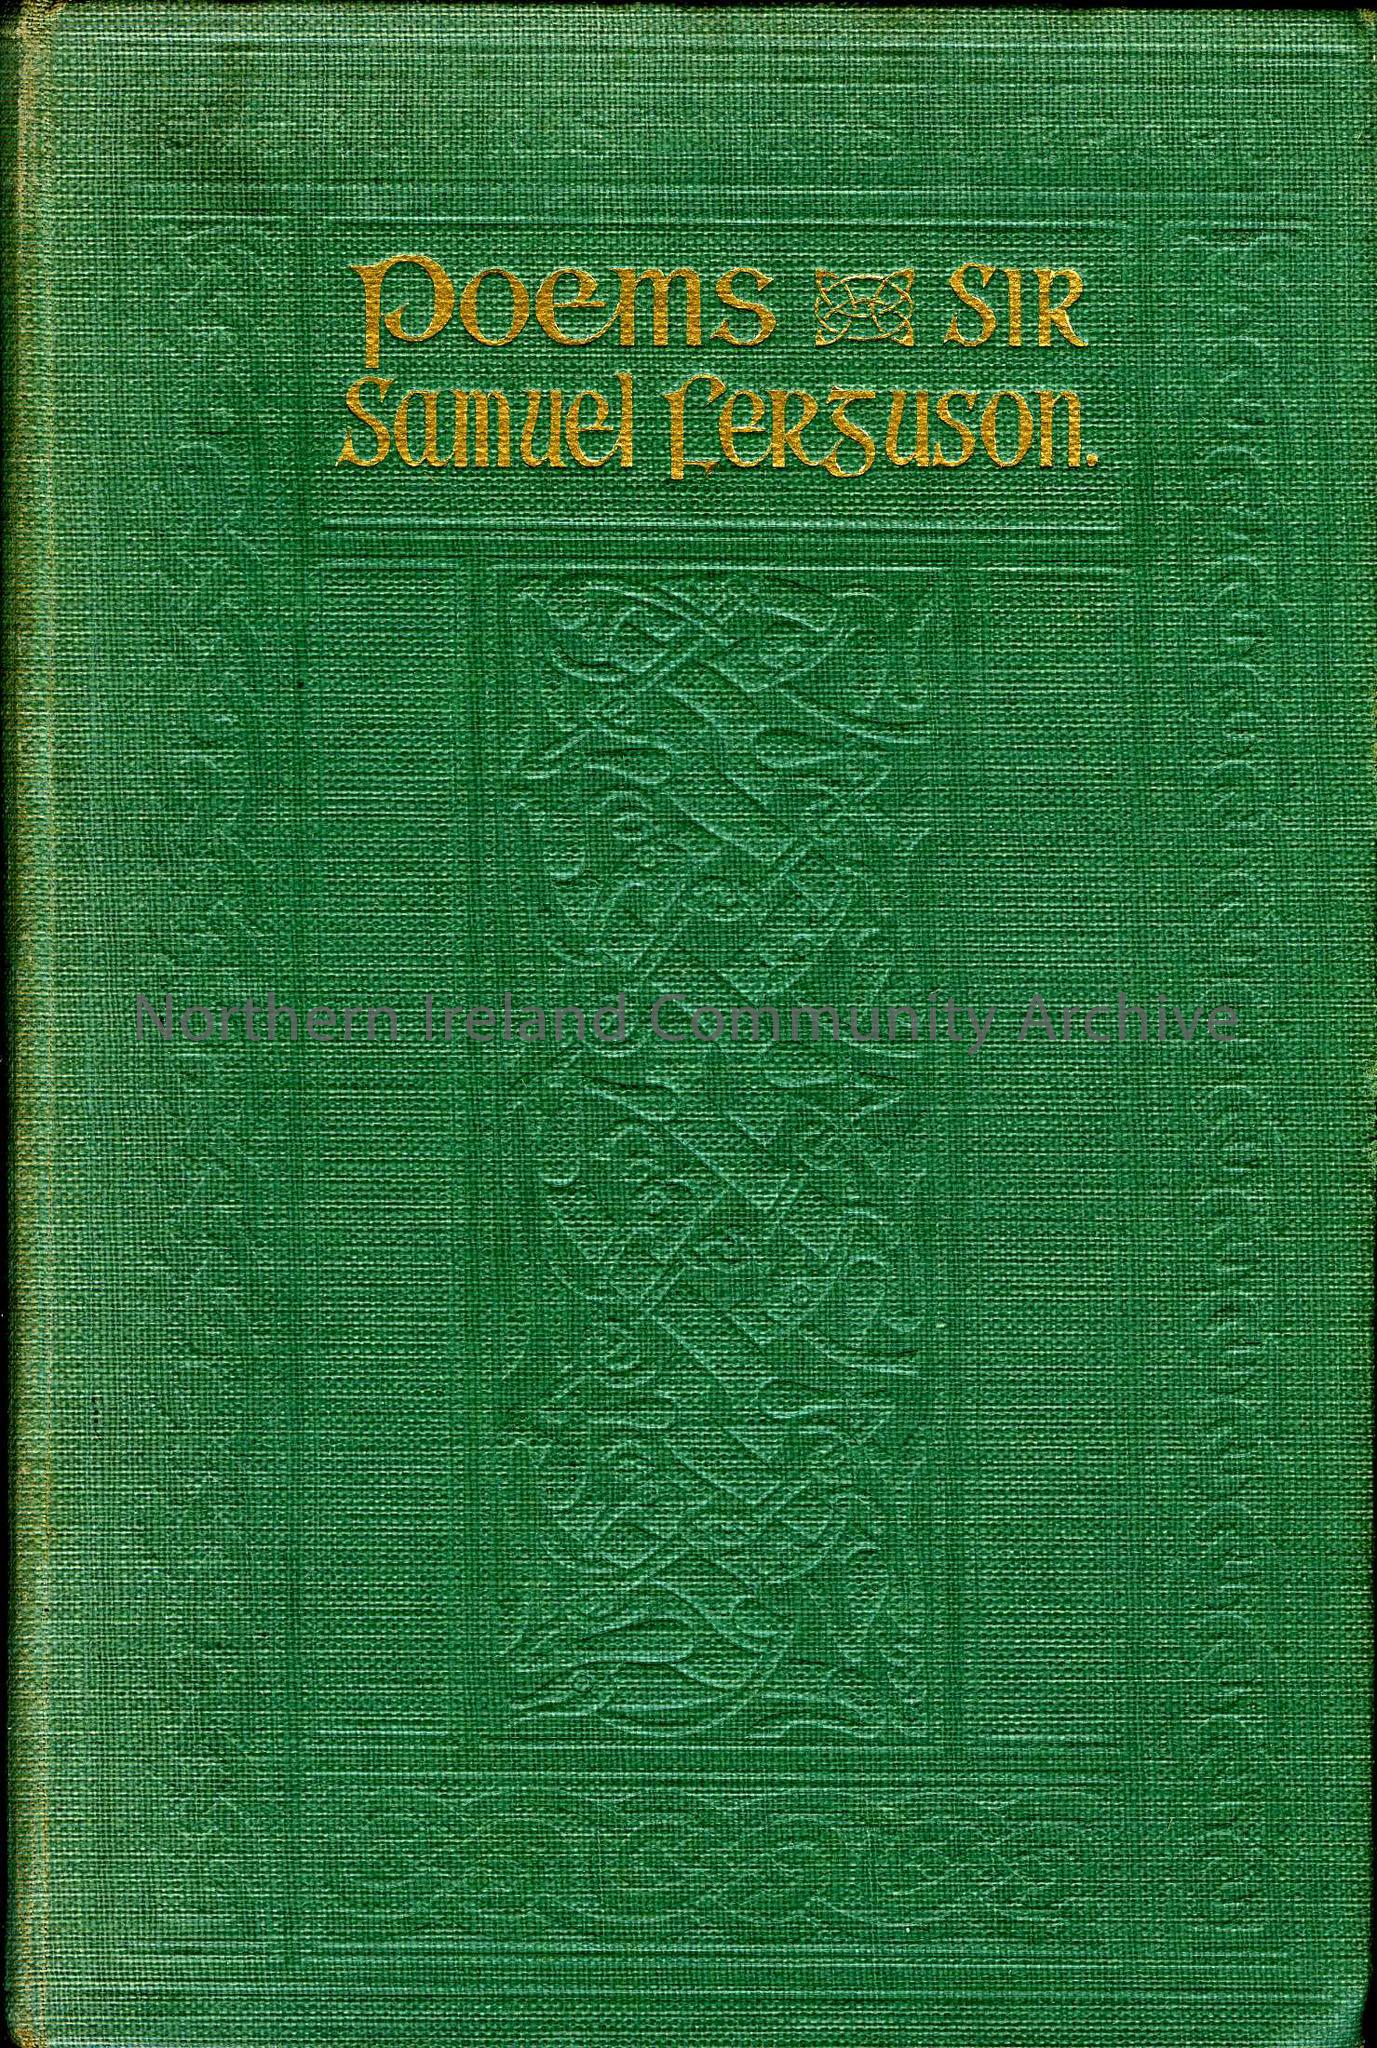 Poems of Sir Samuel Ferguson